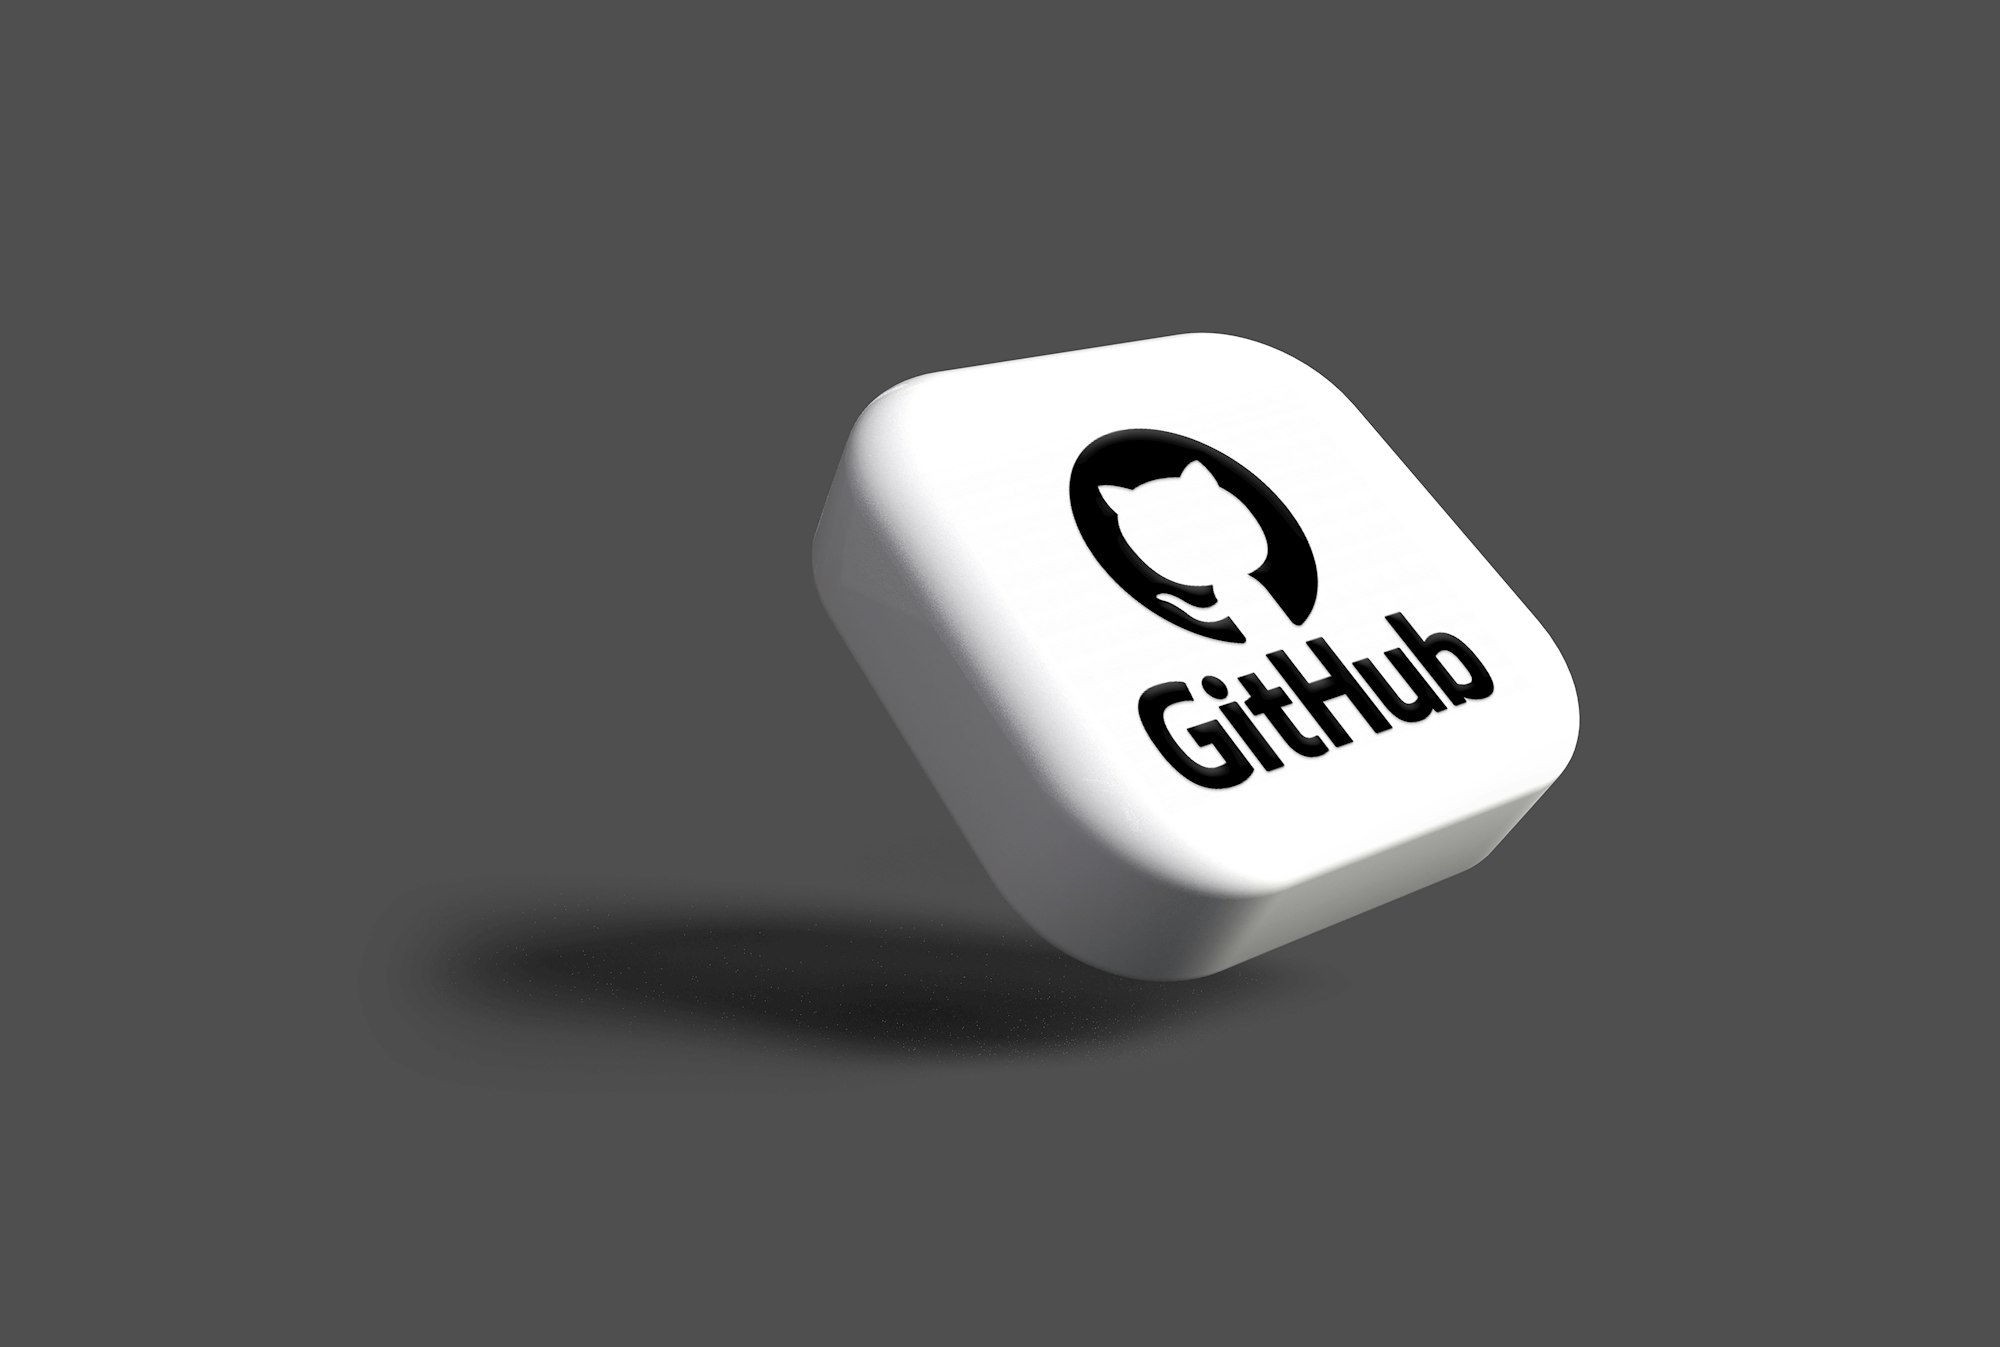 GitHub: the must-have platform for any developer.